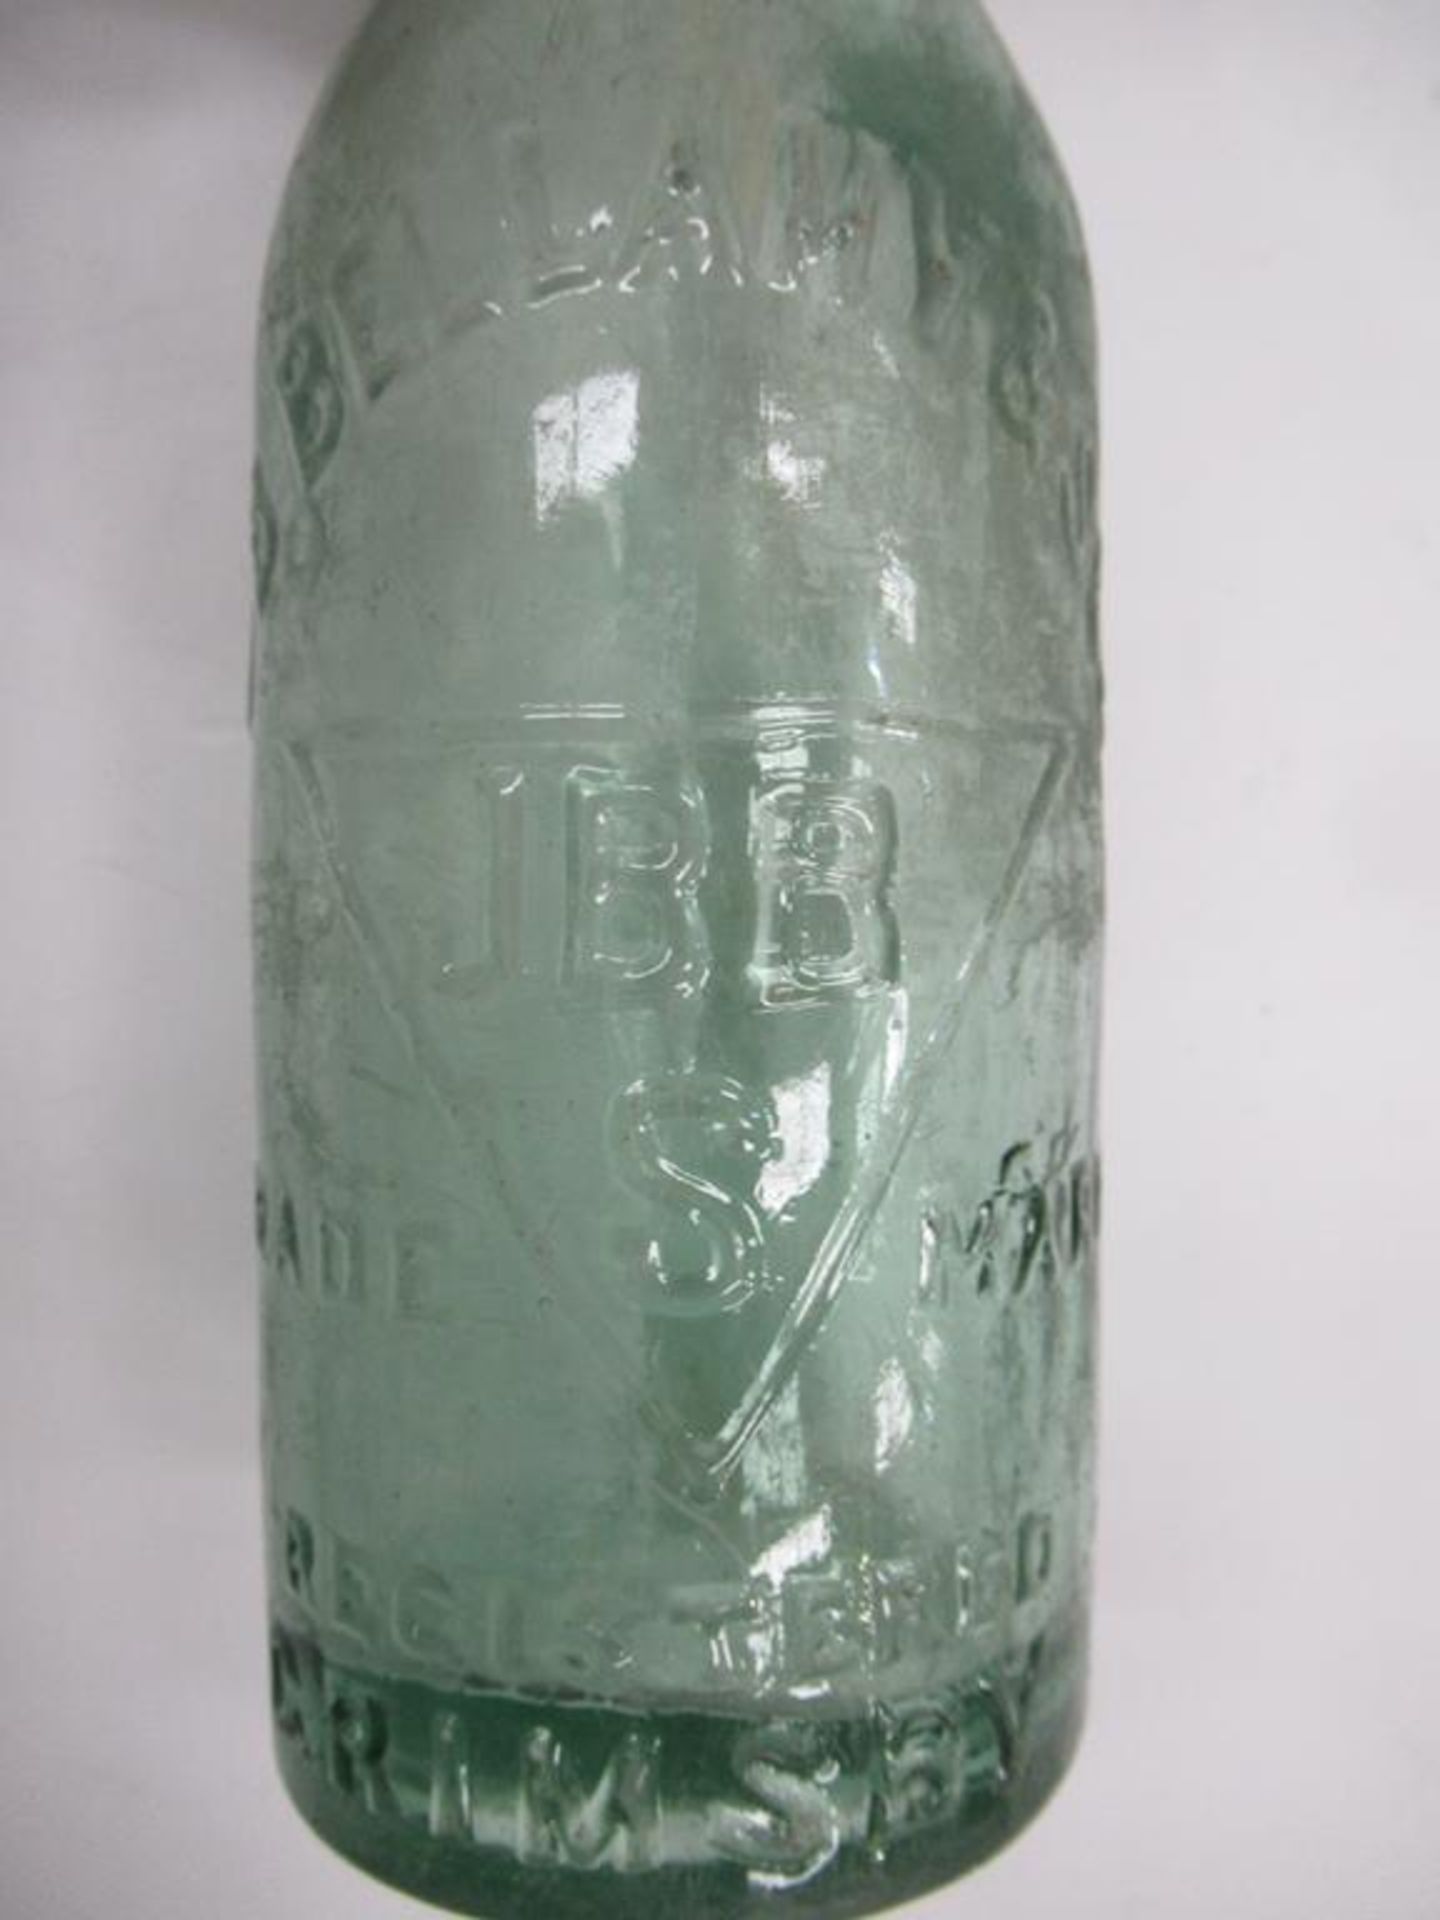 10x Bellamy Bros bottles (1x Grimsby, Louth, Skegness and Horncastle, 2x Grimsby, Louth & Skegness, - Image 27 of 33